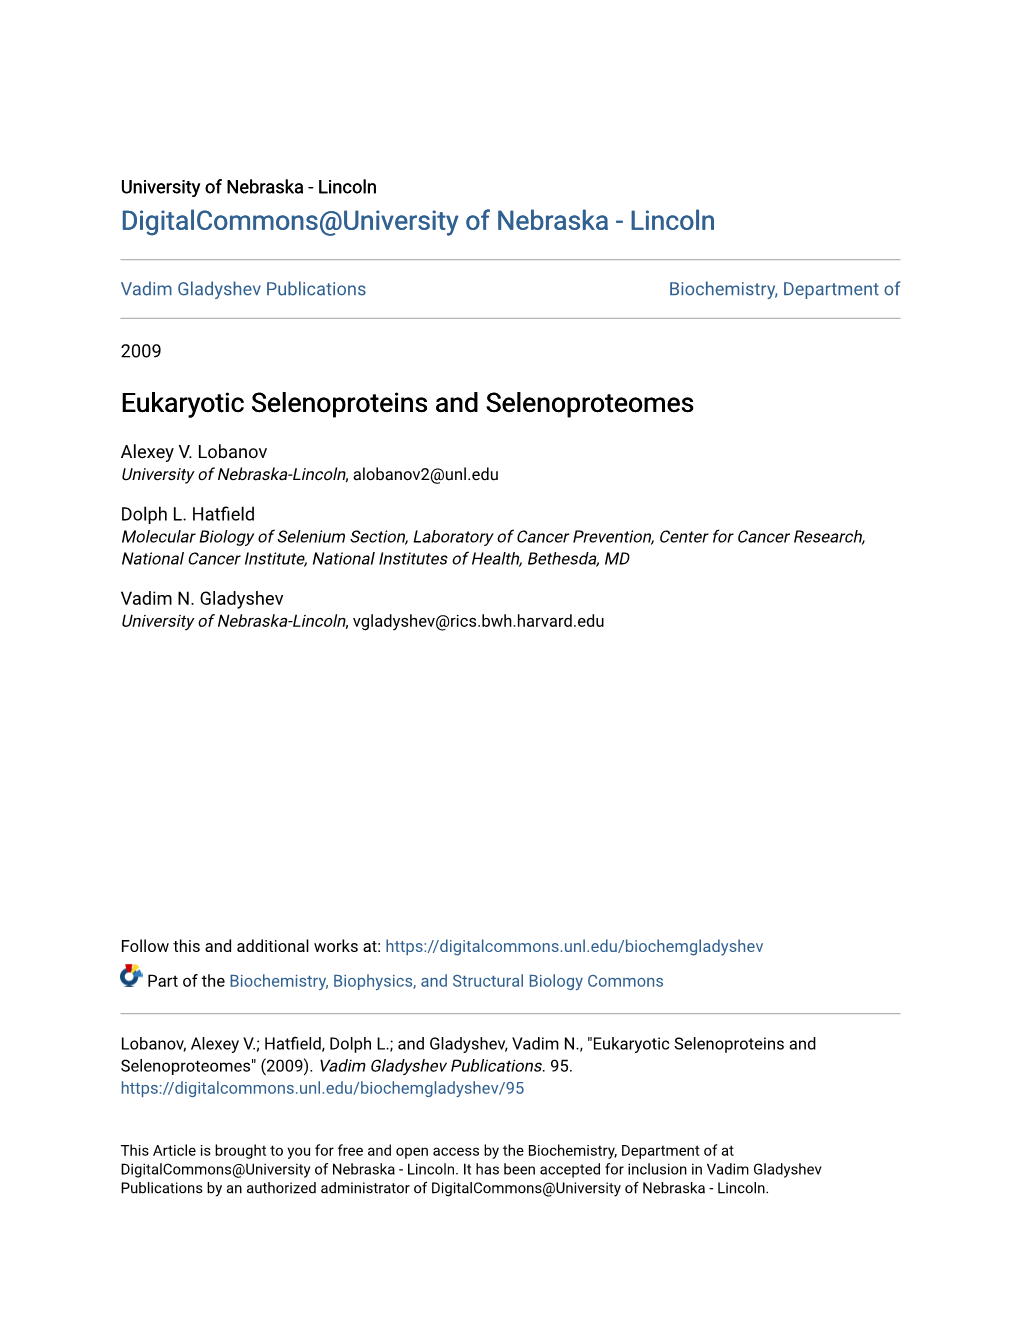 Eukaryotic Selenoproteins and Selenoproteomes